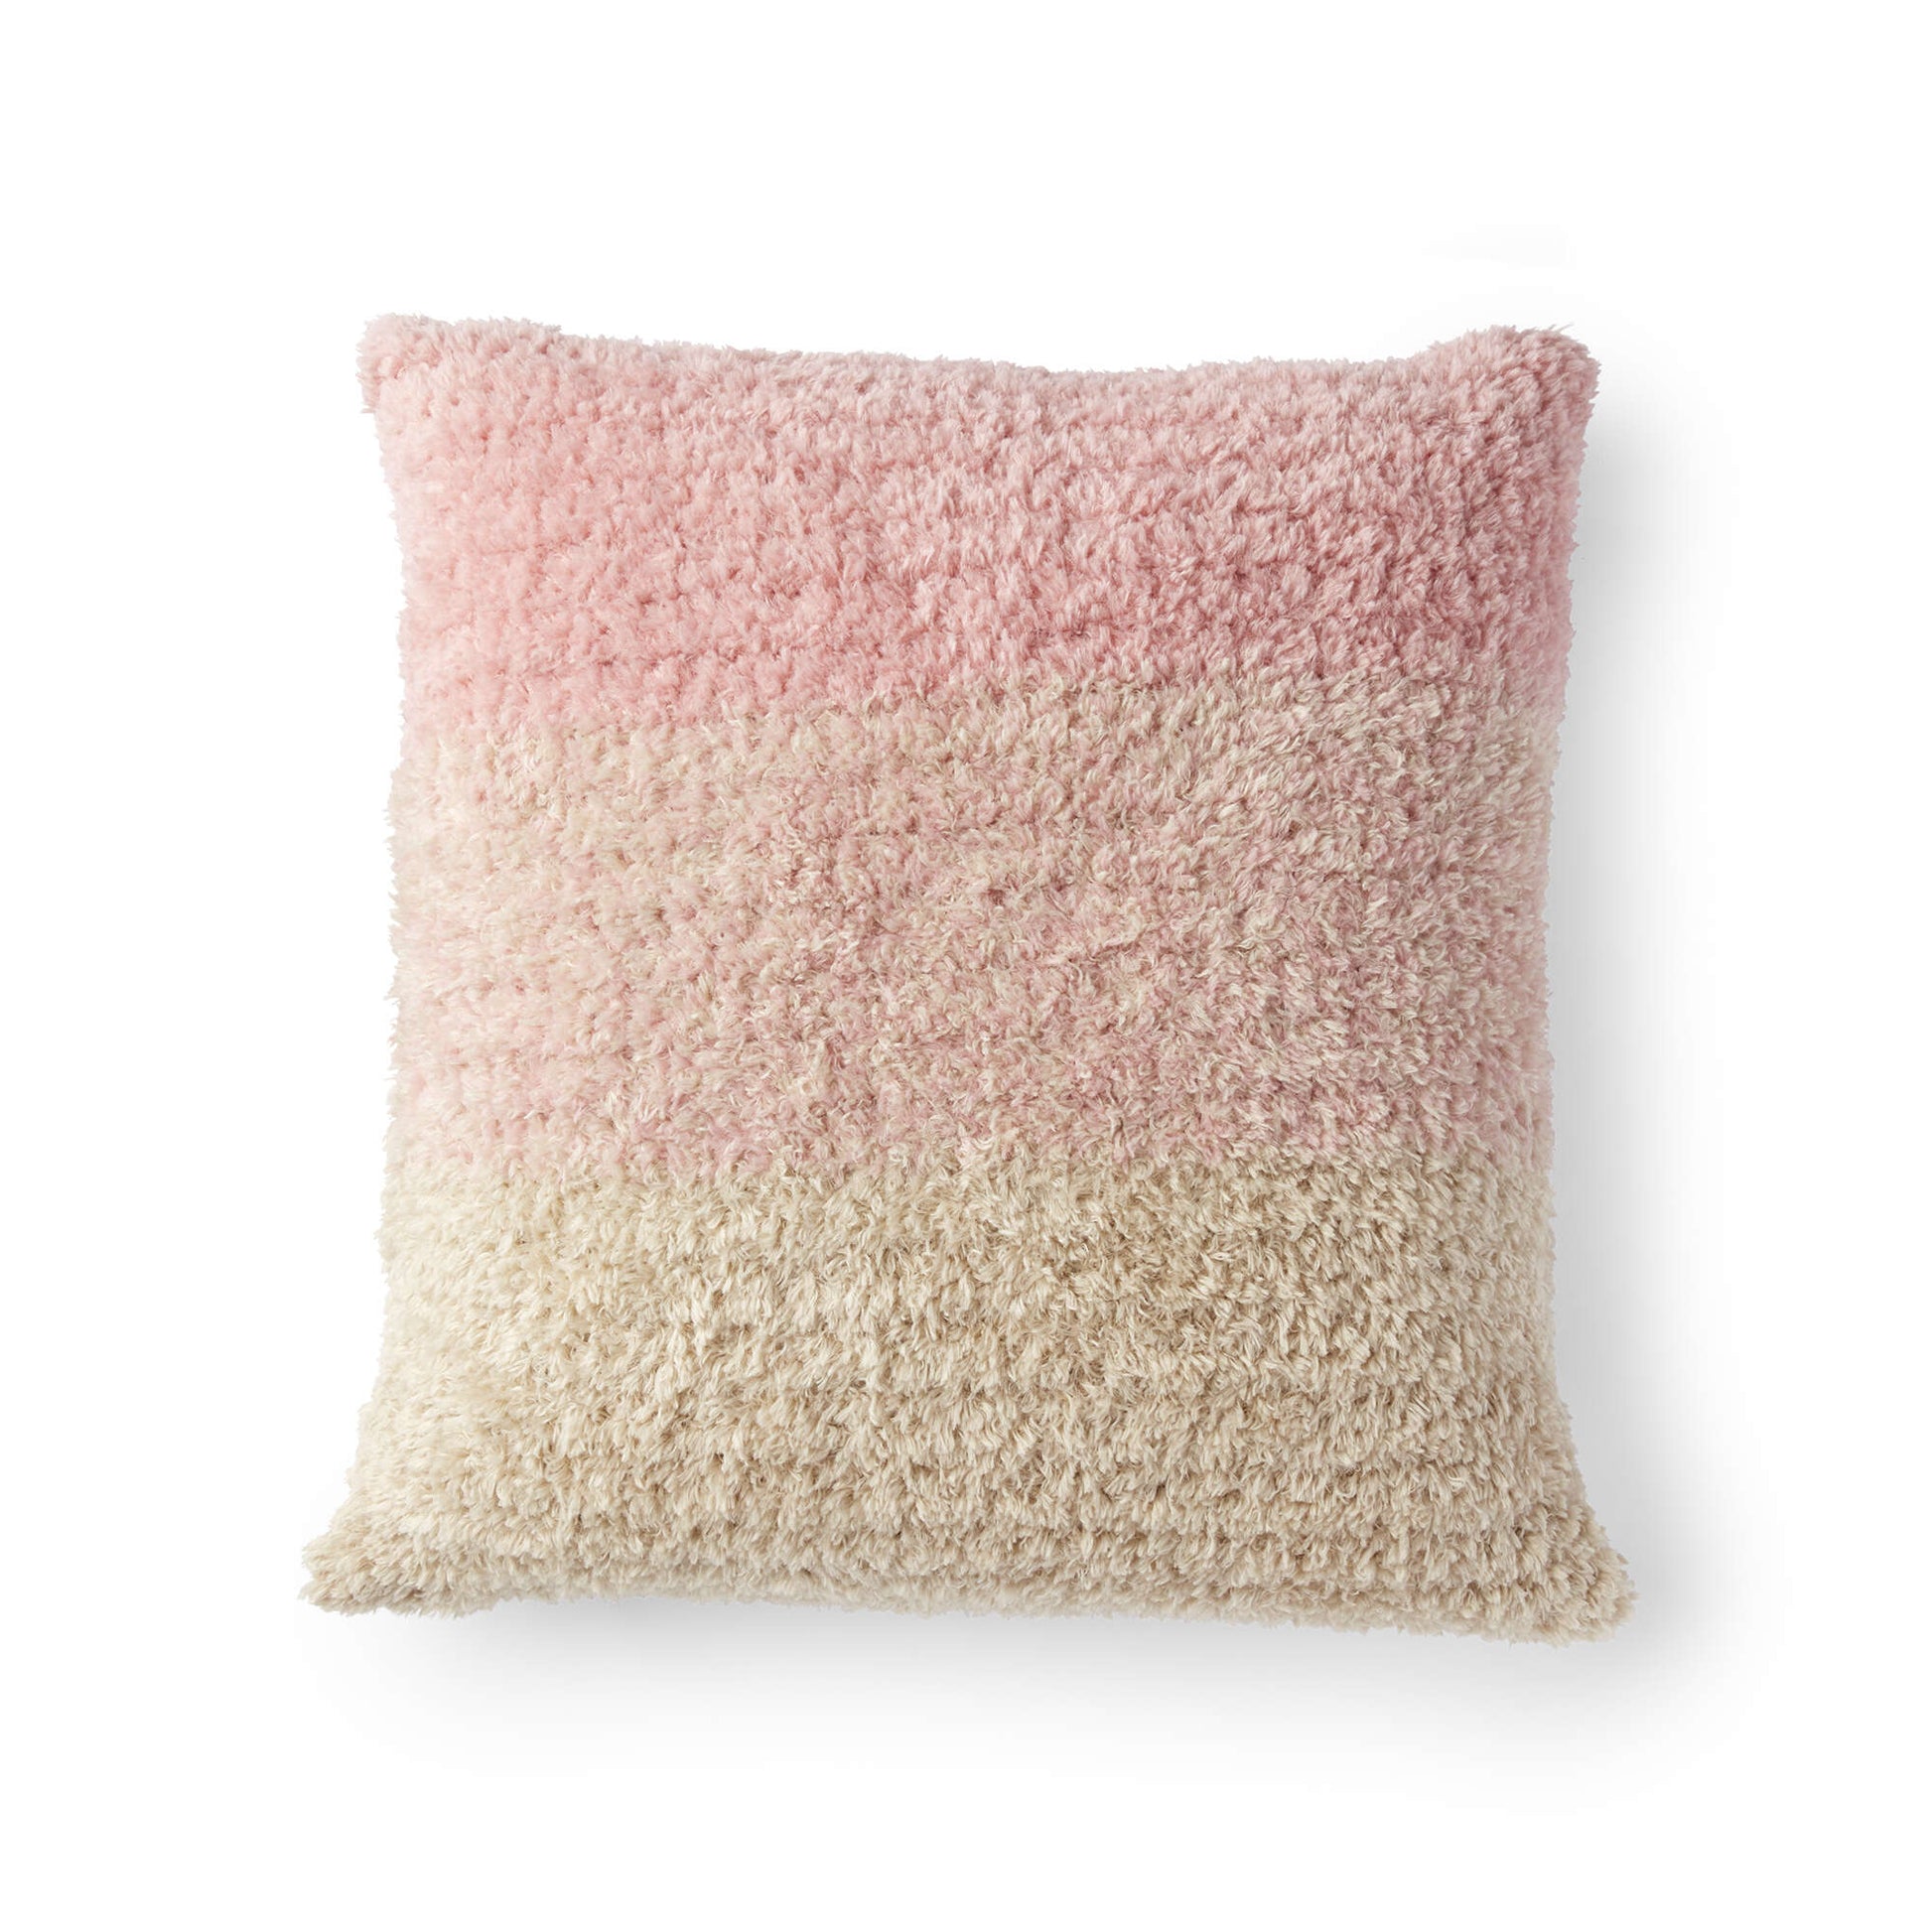 Free Red Heart Crochet Restful Shades Pillow Pattern